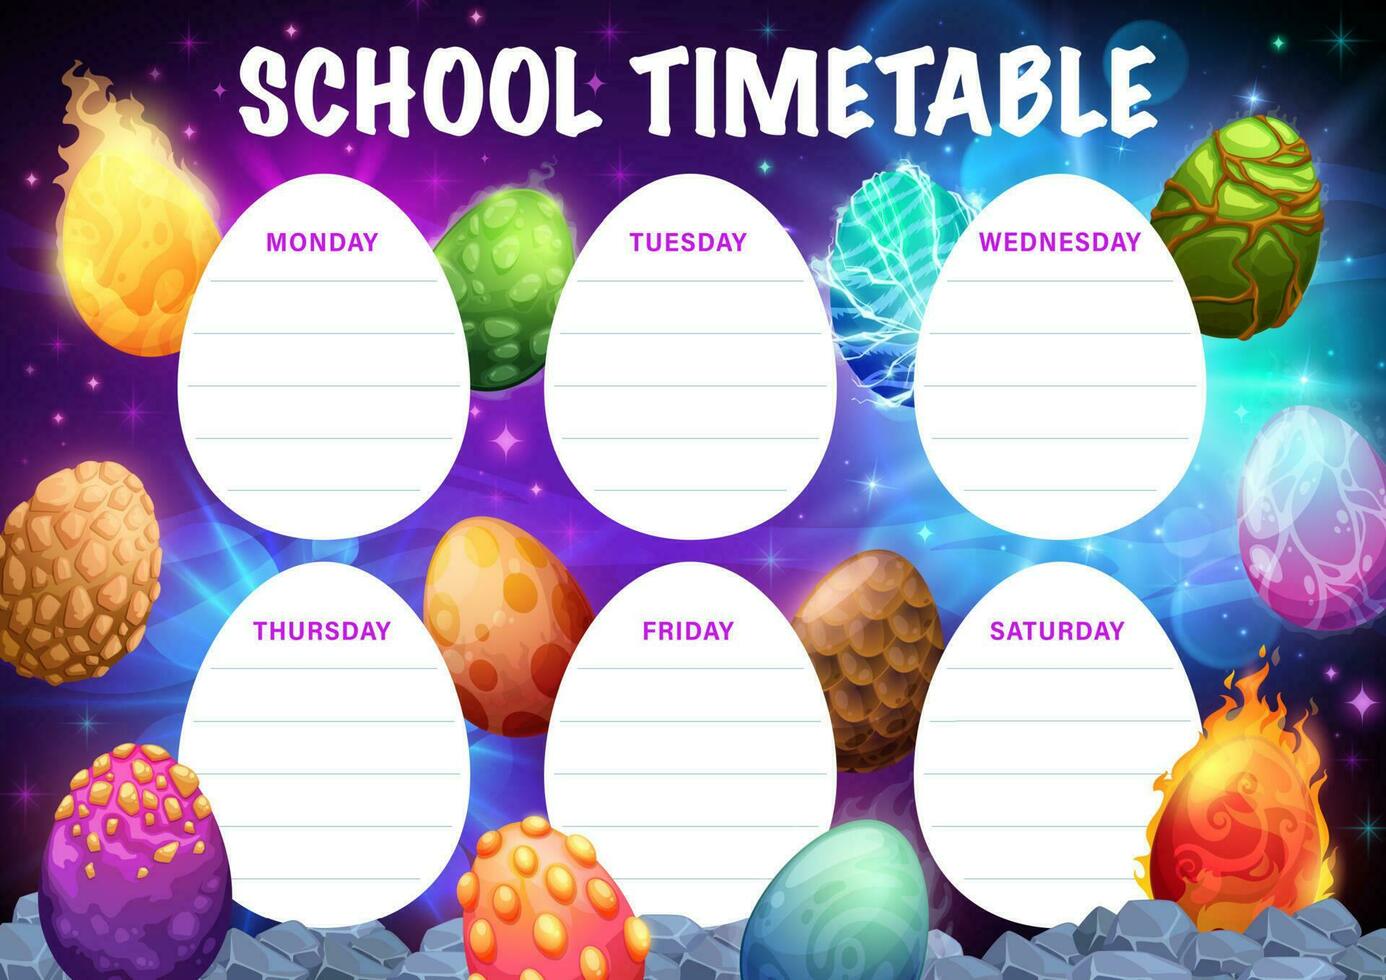 School timetable schedule, fantastic dinosaur eggs vector